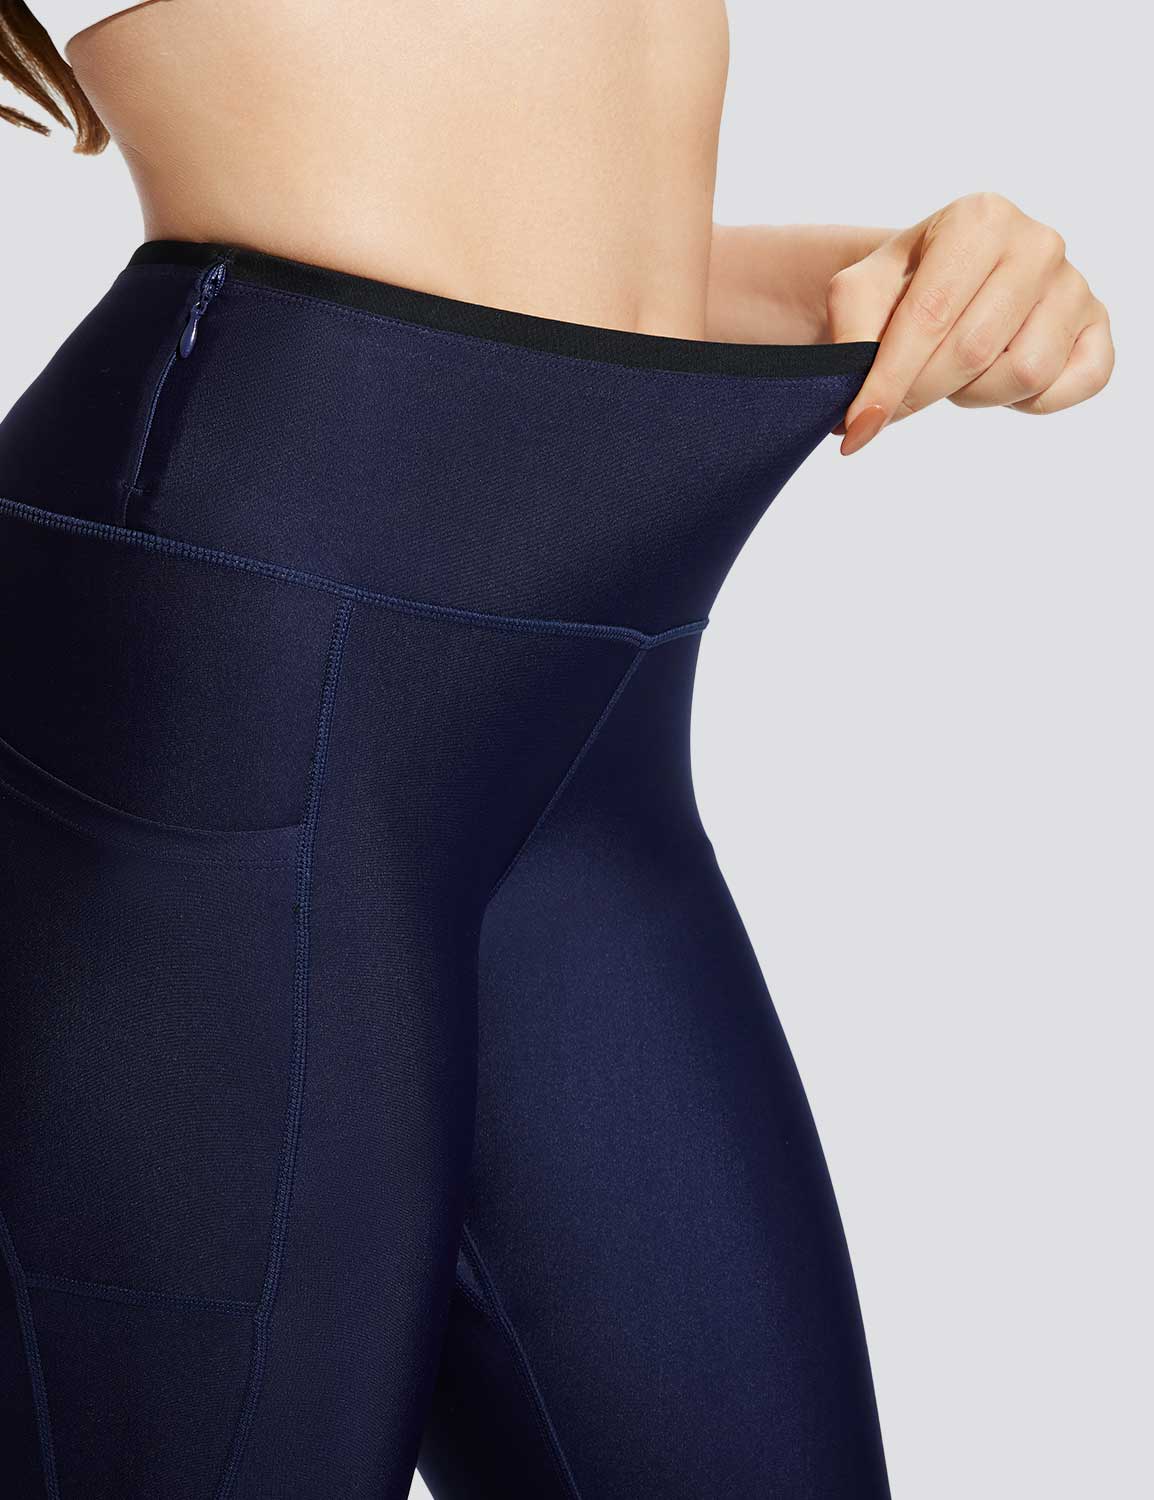 Baleaf Women's UPF 50+ Multi-Pocket Swimming Pants Peacoat Details